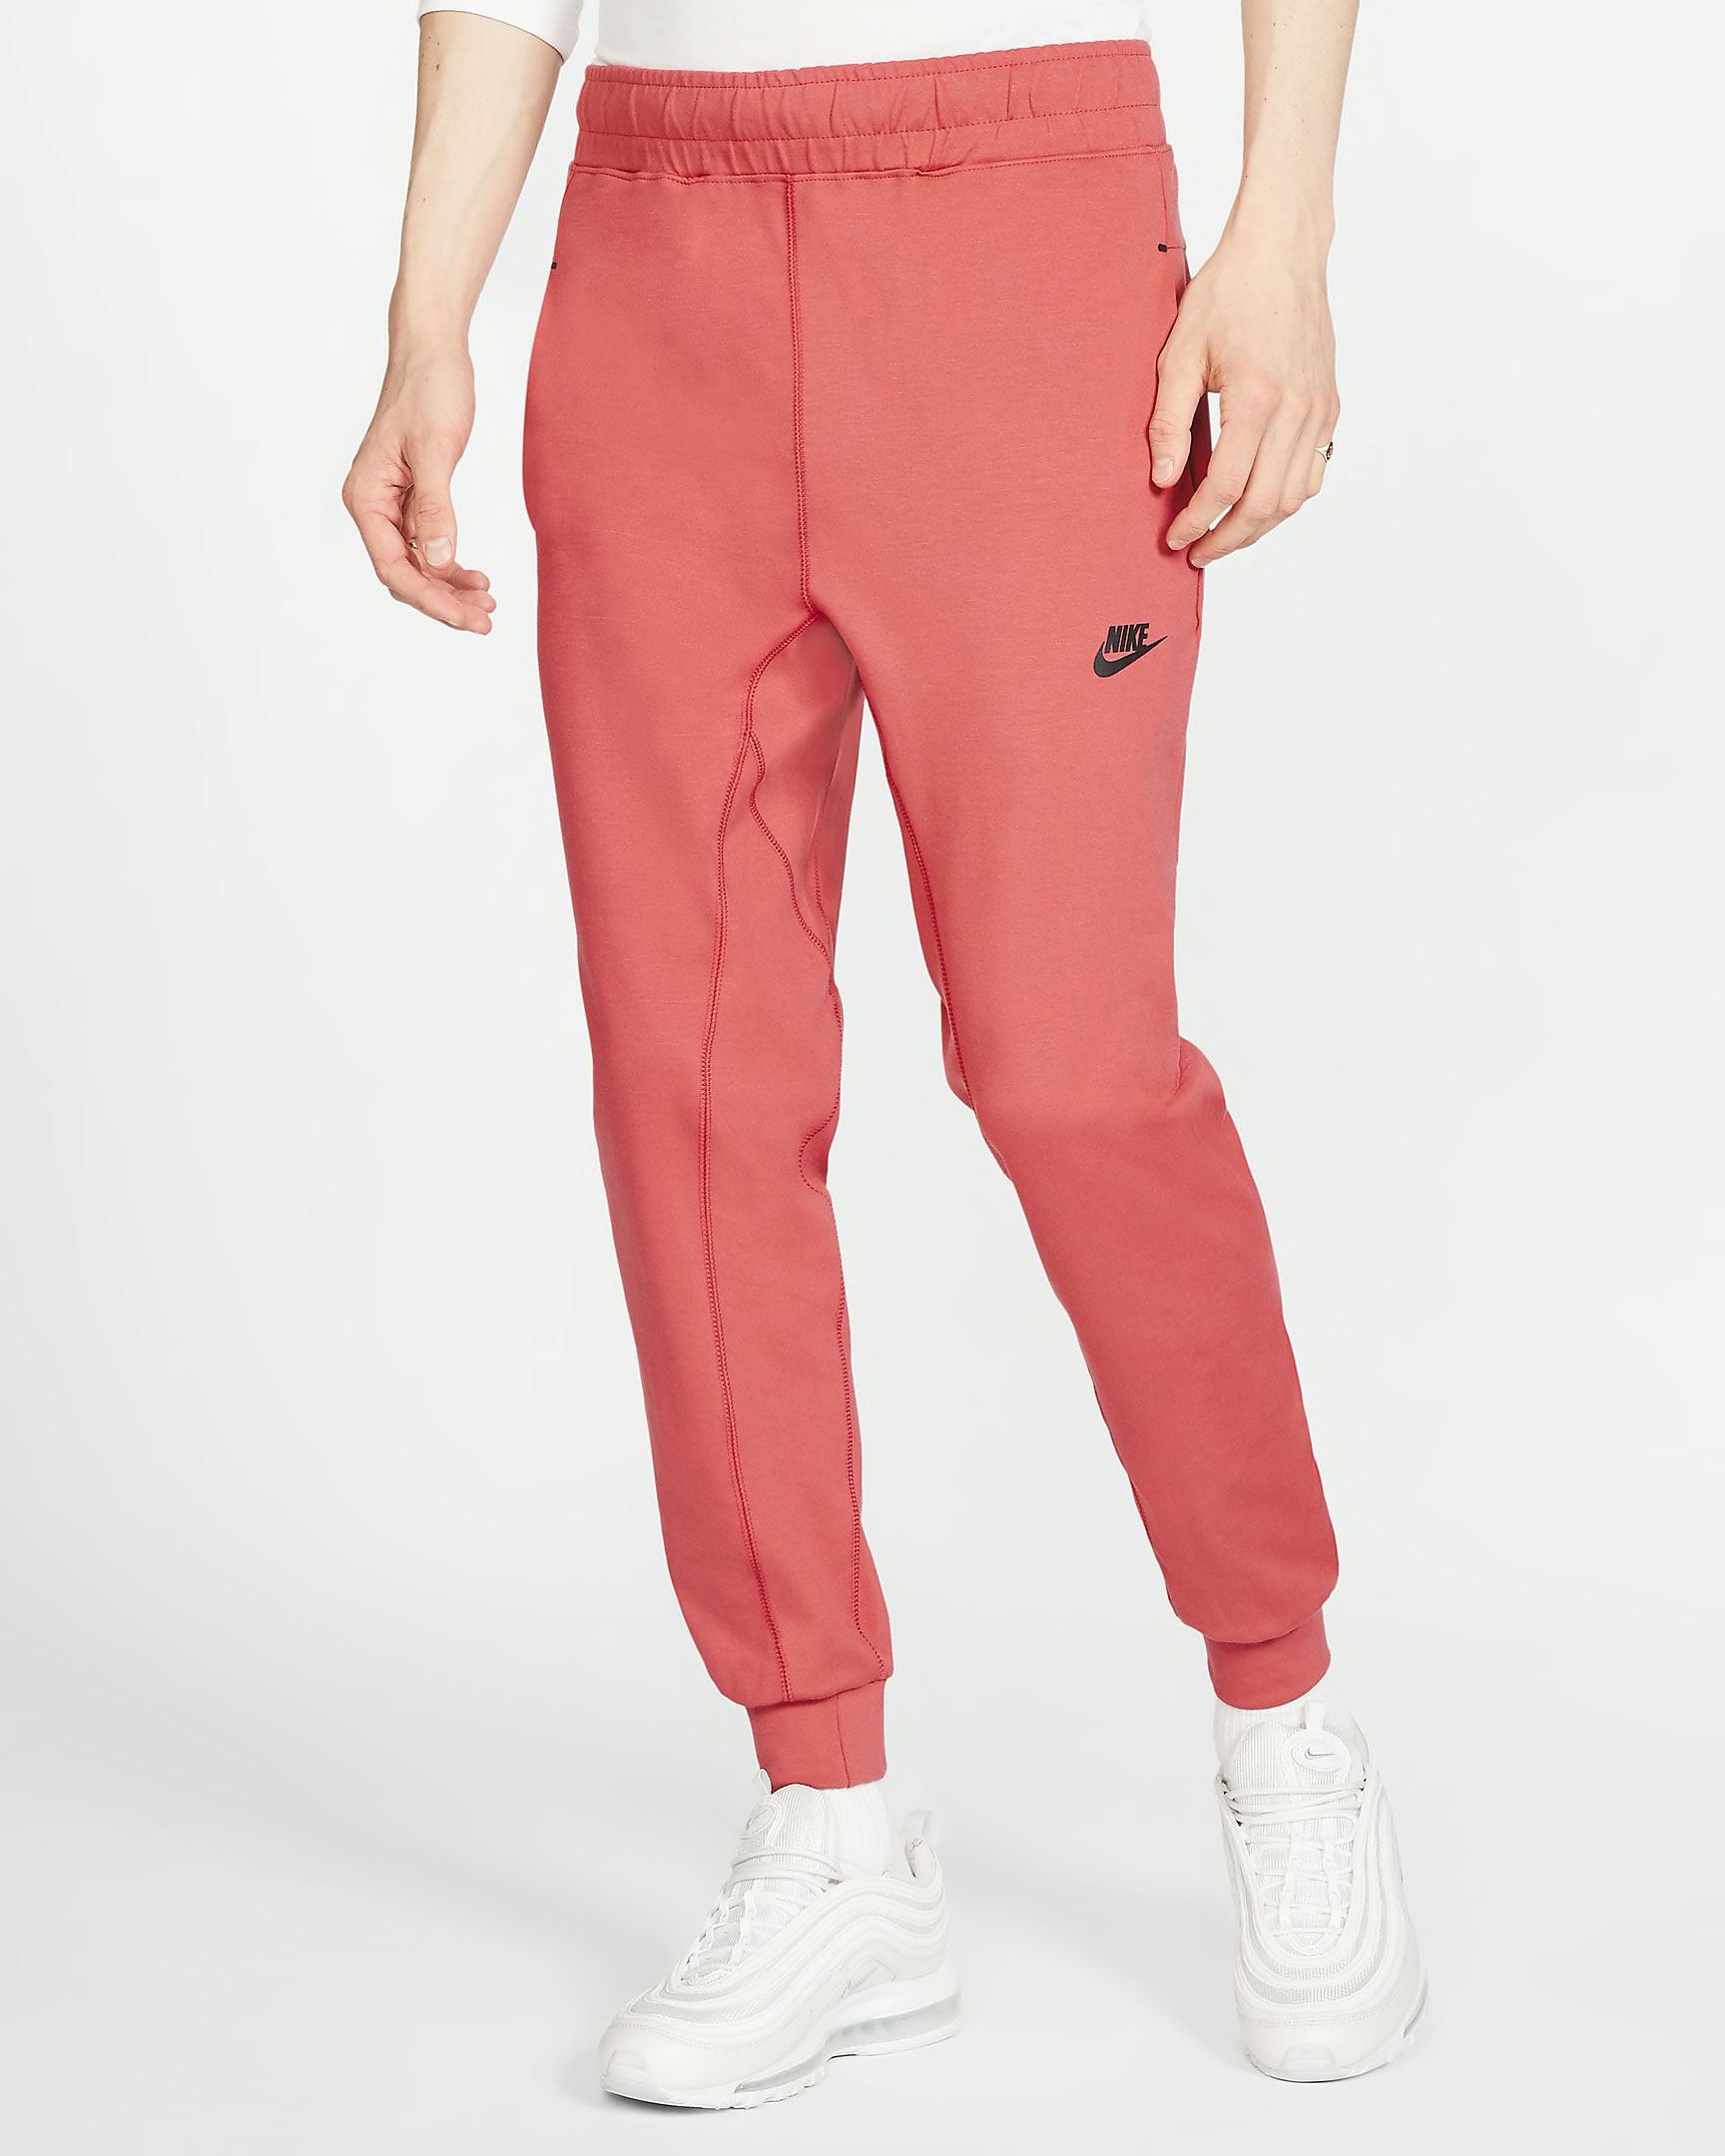 nike-infrared-jogger-pants